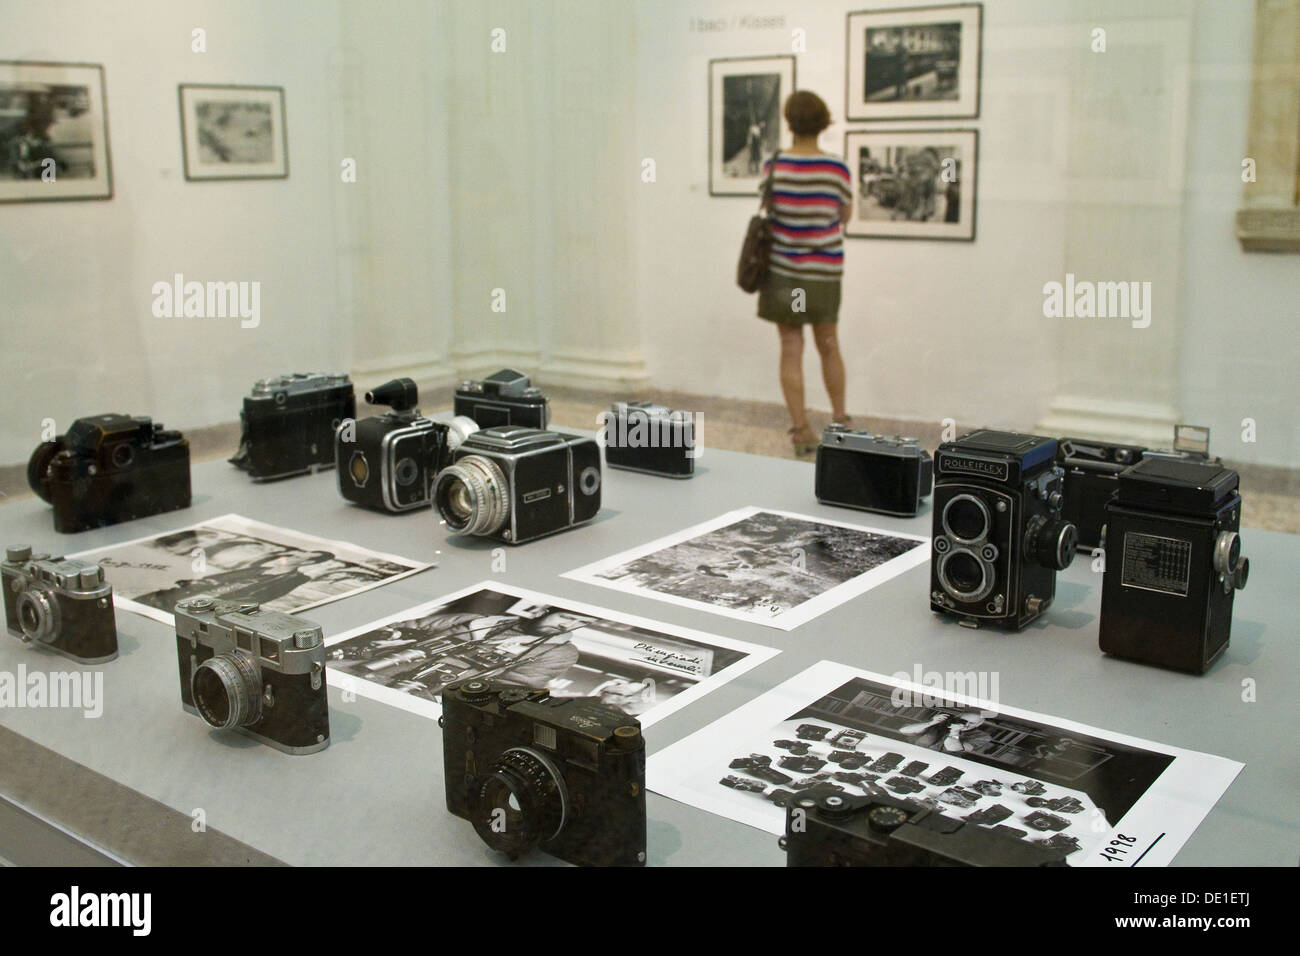 Italy, Milan, Gianni Berengo Gardin photographic exhibition Stock Photo